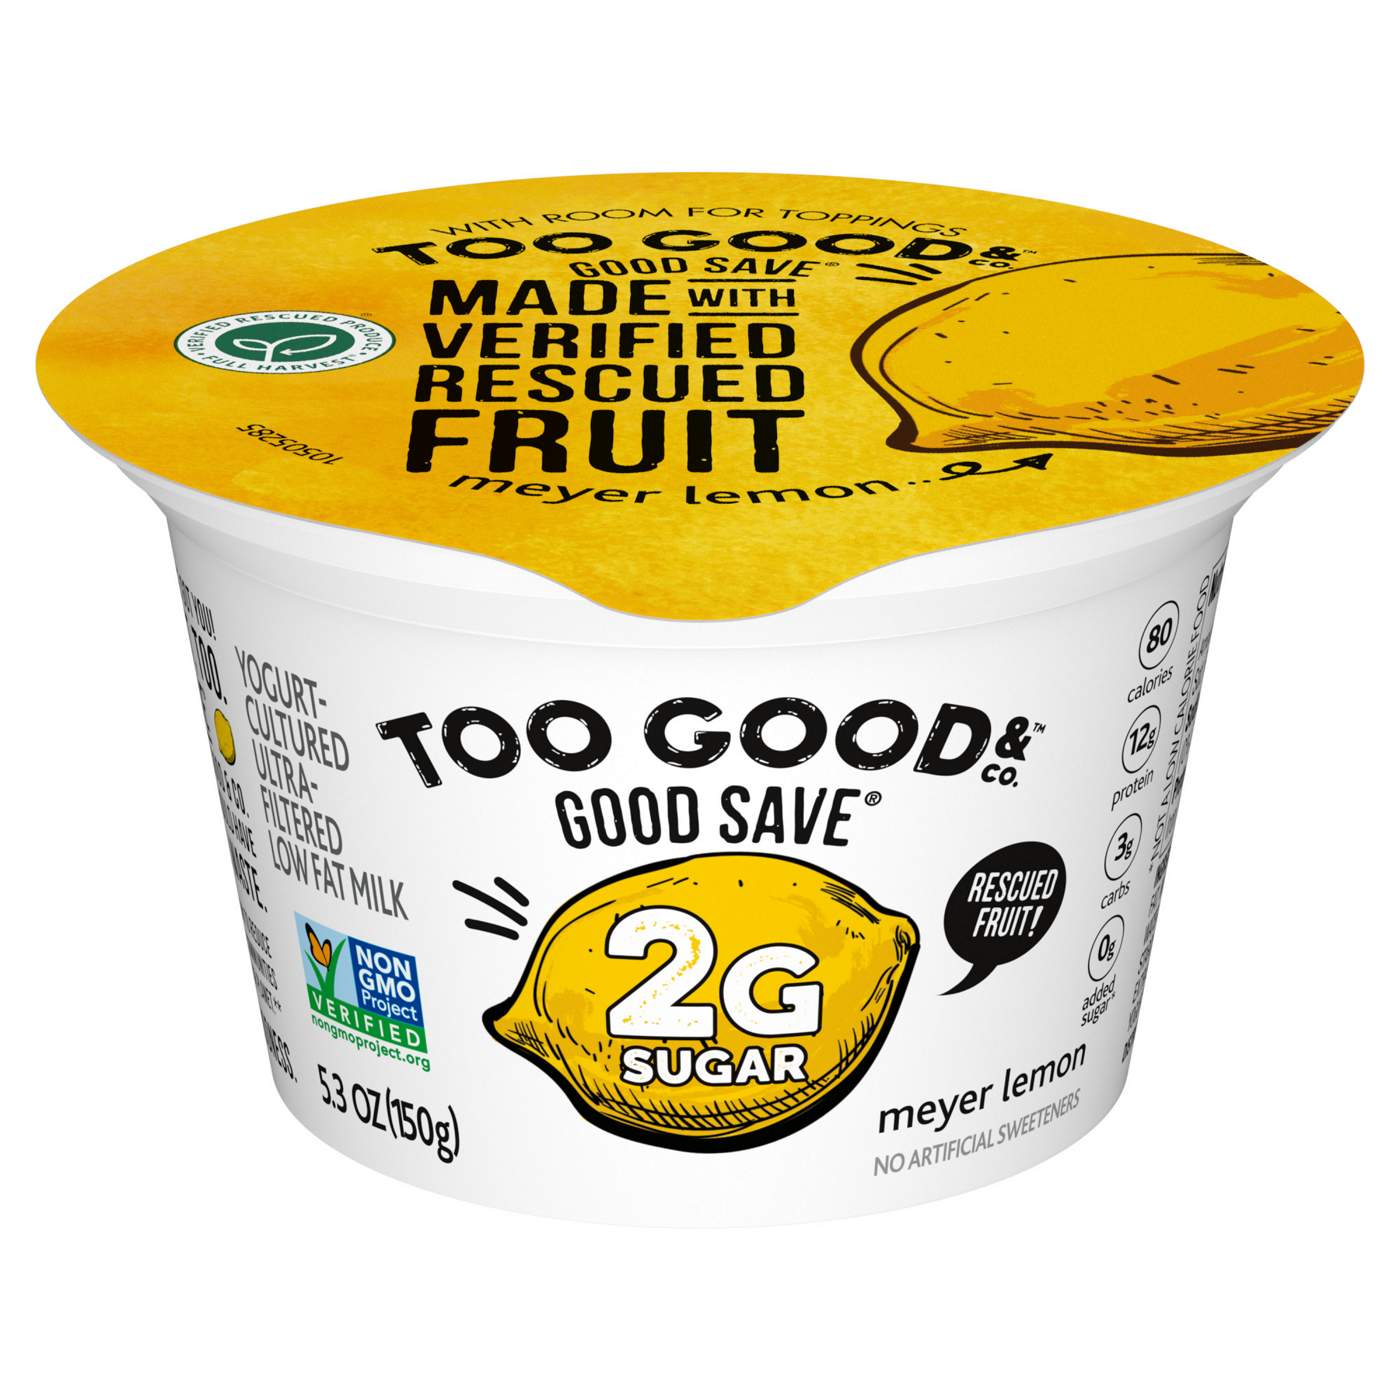 Too Good & Co. Good Save Lower Sugar Yogurt - Meyer Lemon ; image 2 of 6